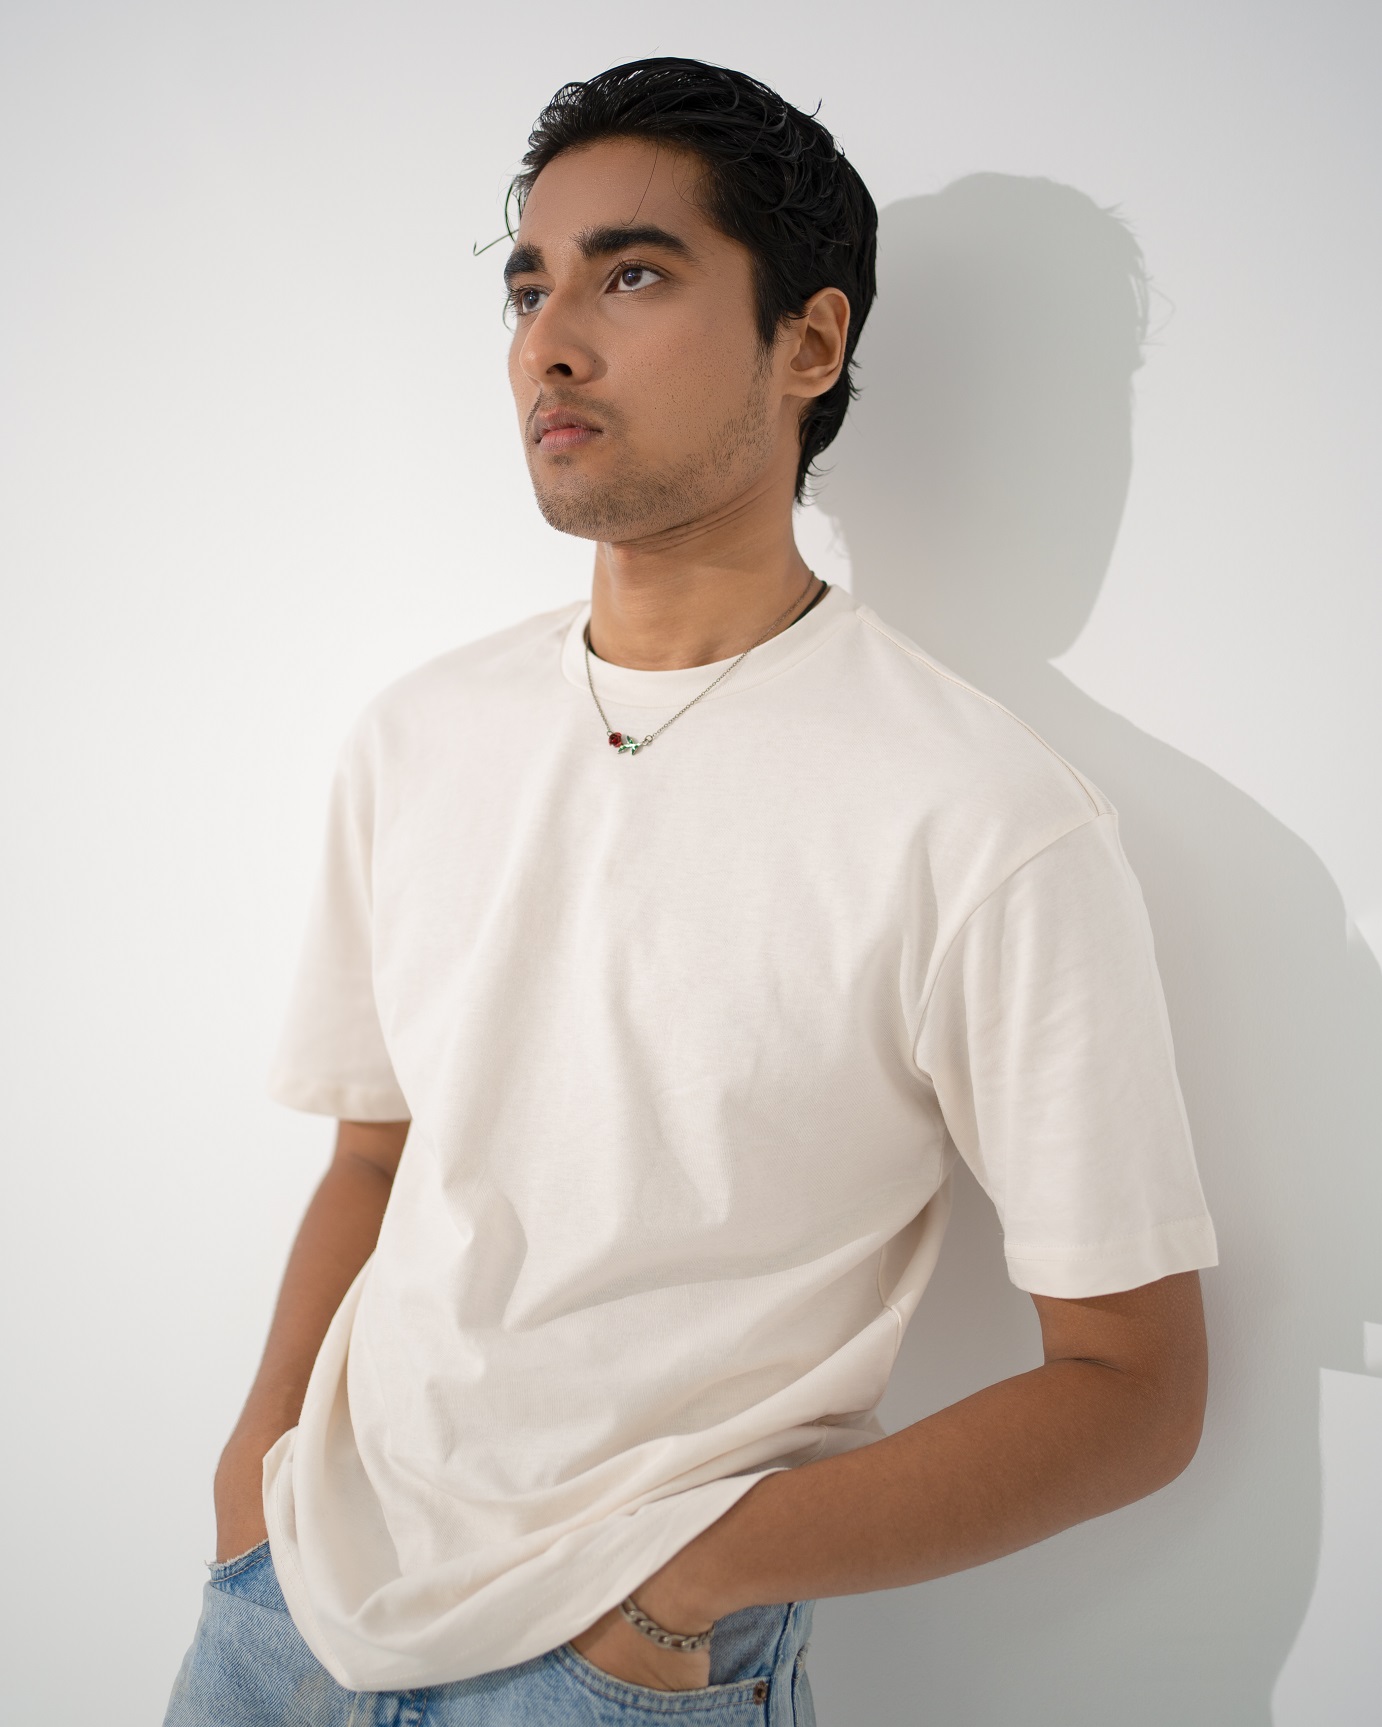 Unisex brown drop shoulder t-shirt - FashionHQ